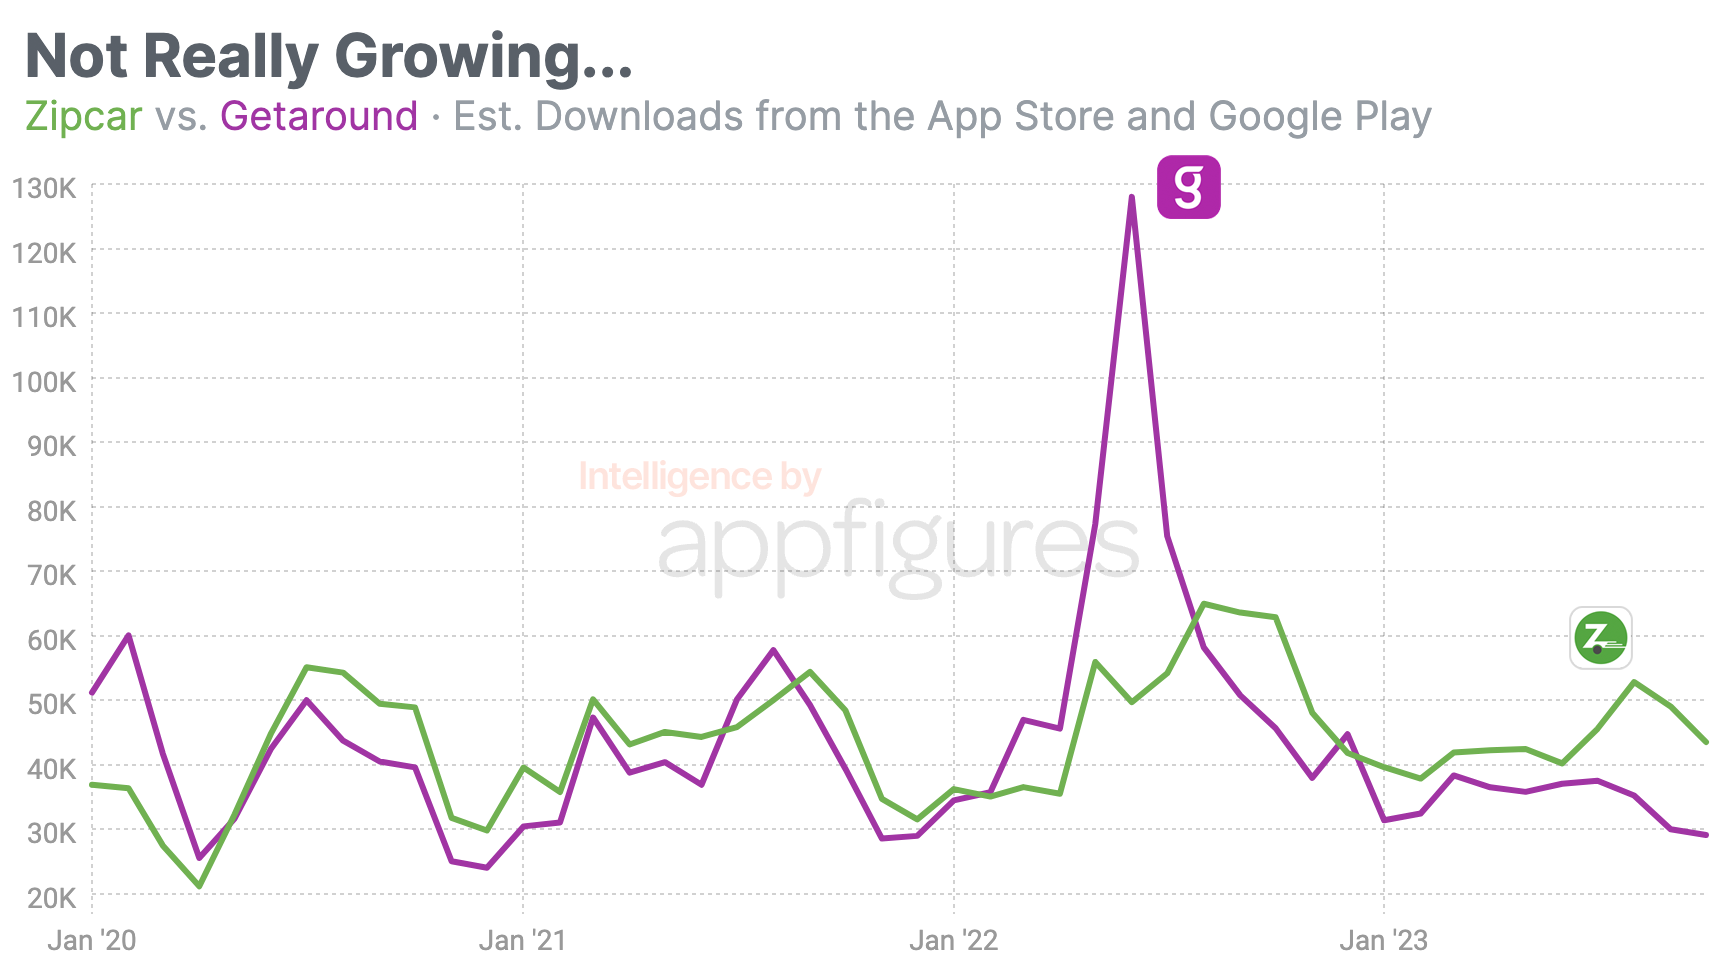 Zipcar vs. Getaround mobile app downloads